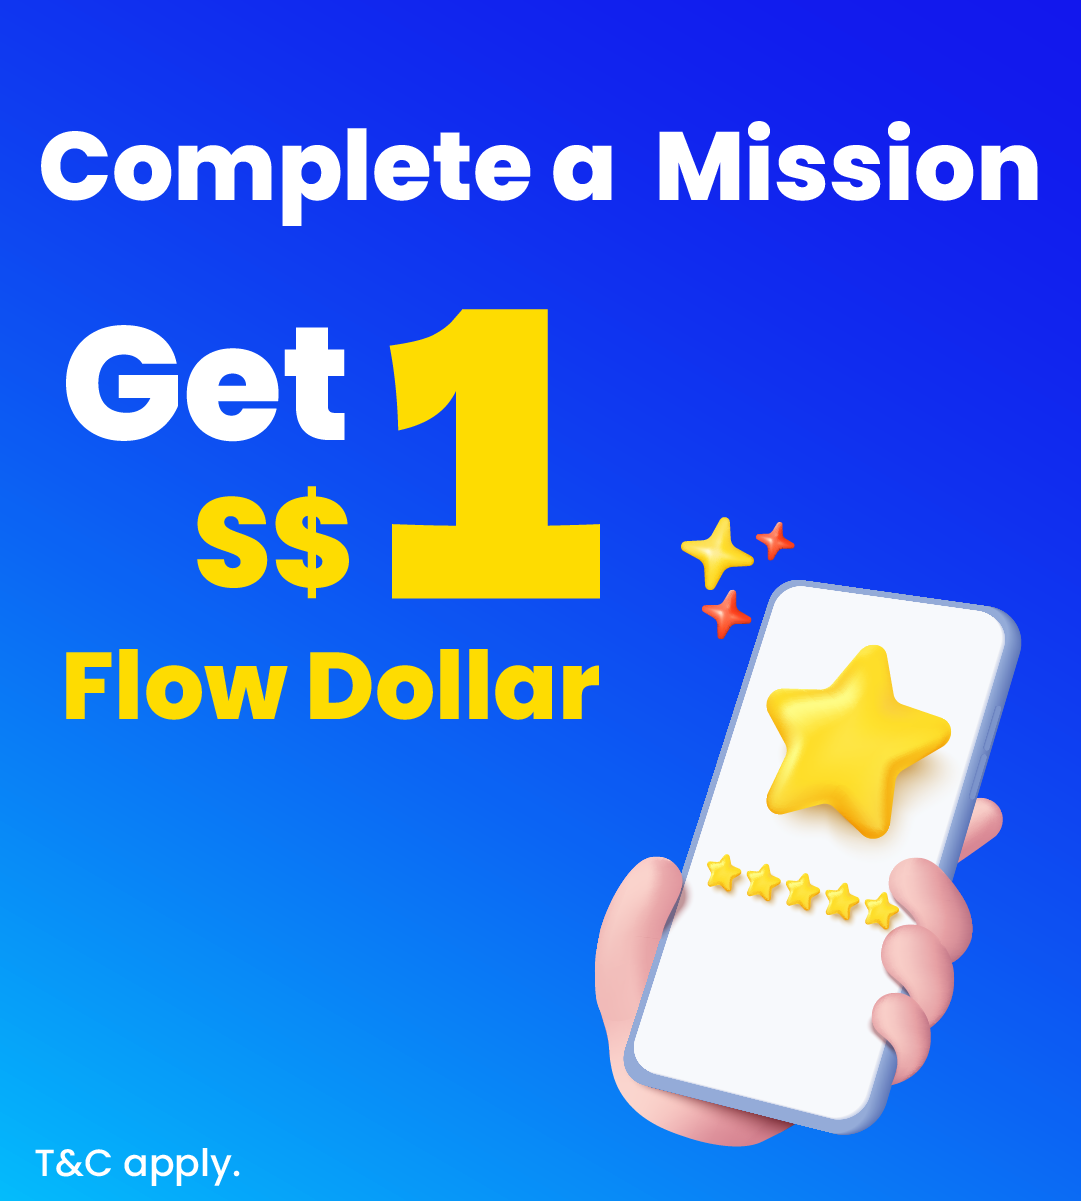 Complete a Mission & Get S$1 Flow Dollar!